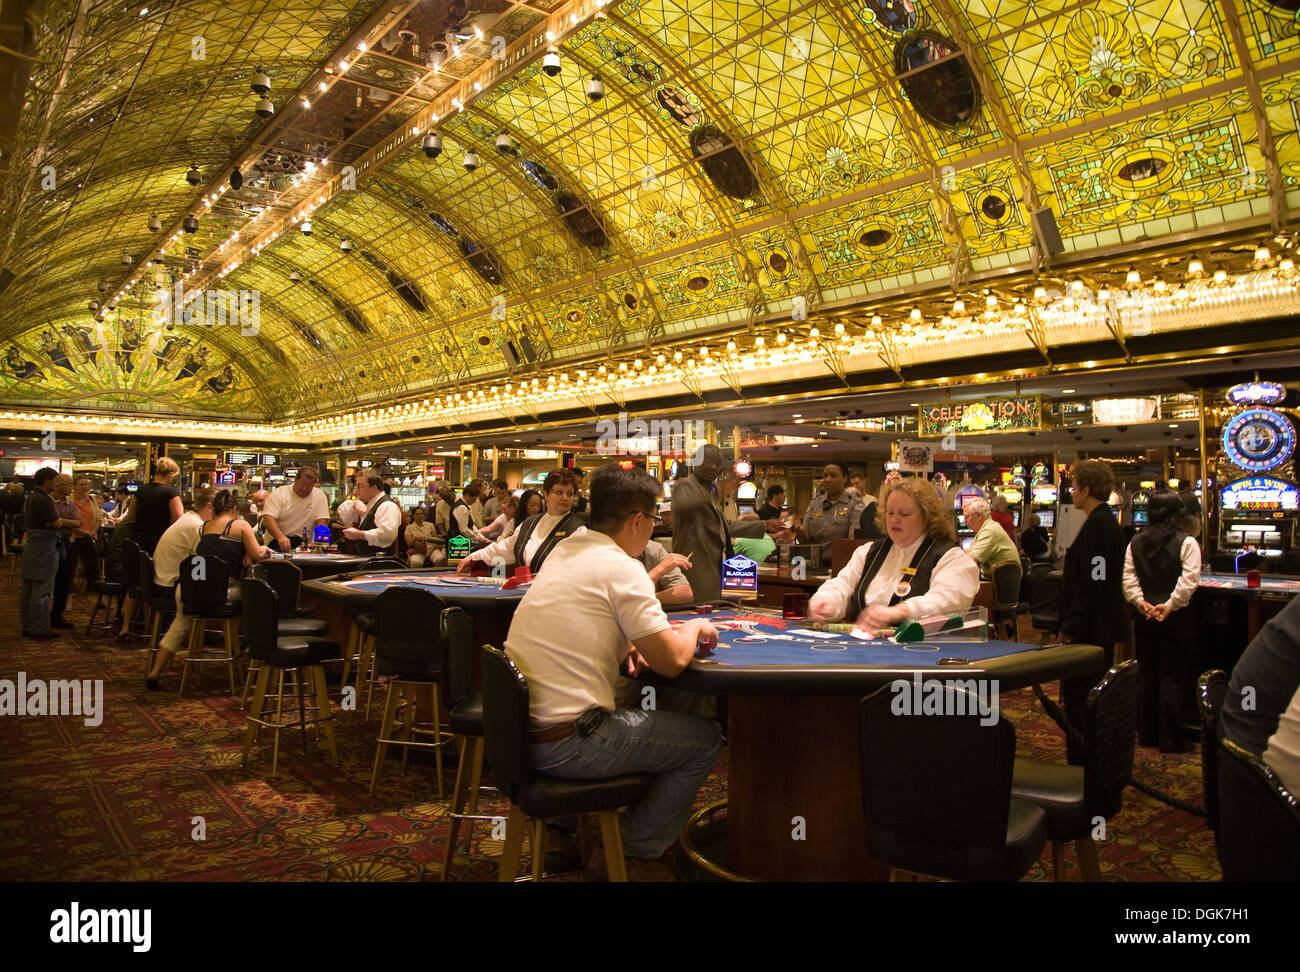 Bellagio Las Vegas Poker Room